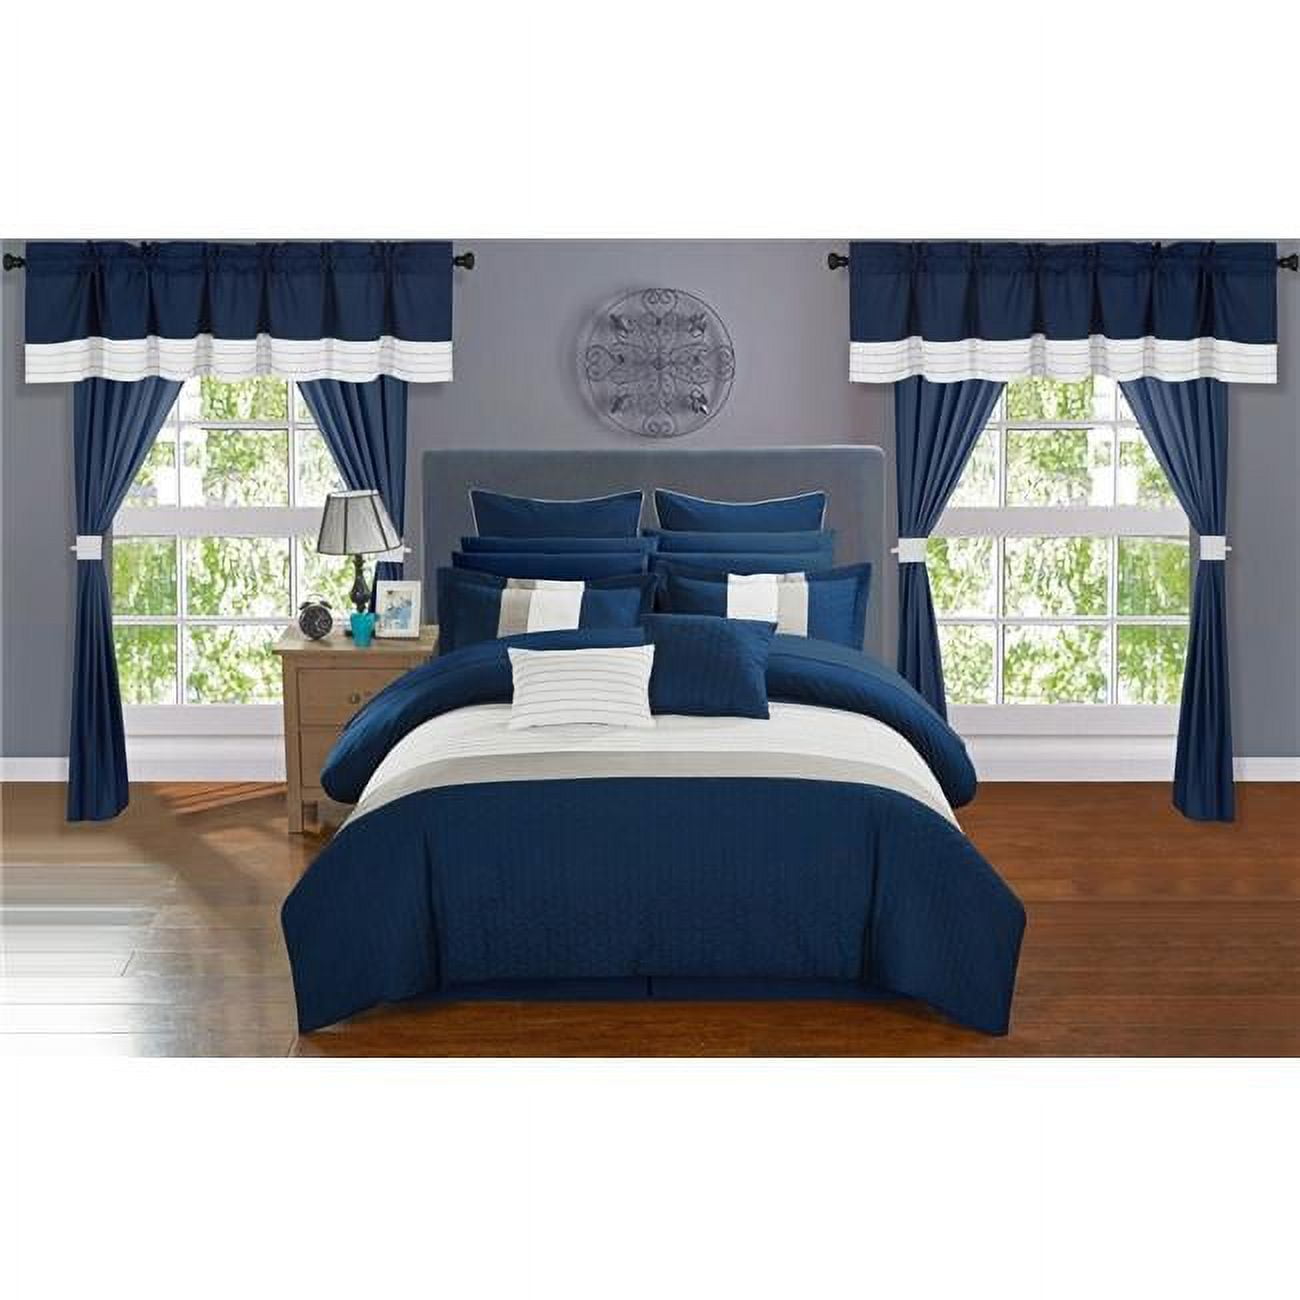 Cs0867-us 24 Piece Quilted Embroidered Complete Comforter Bed Set, Navy - Queen